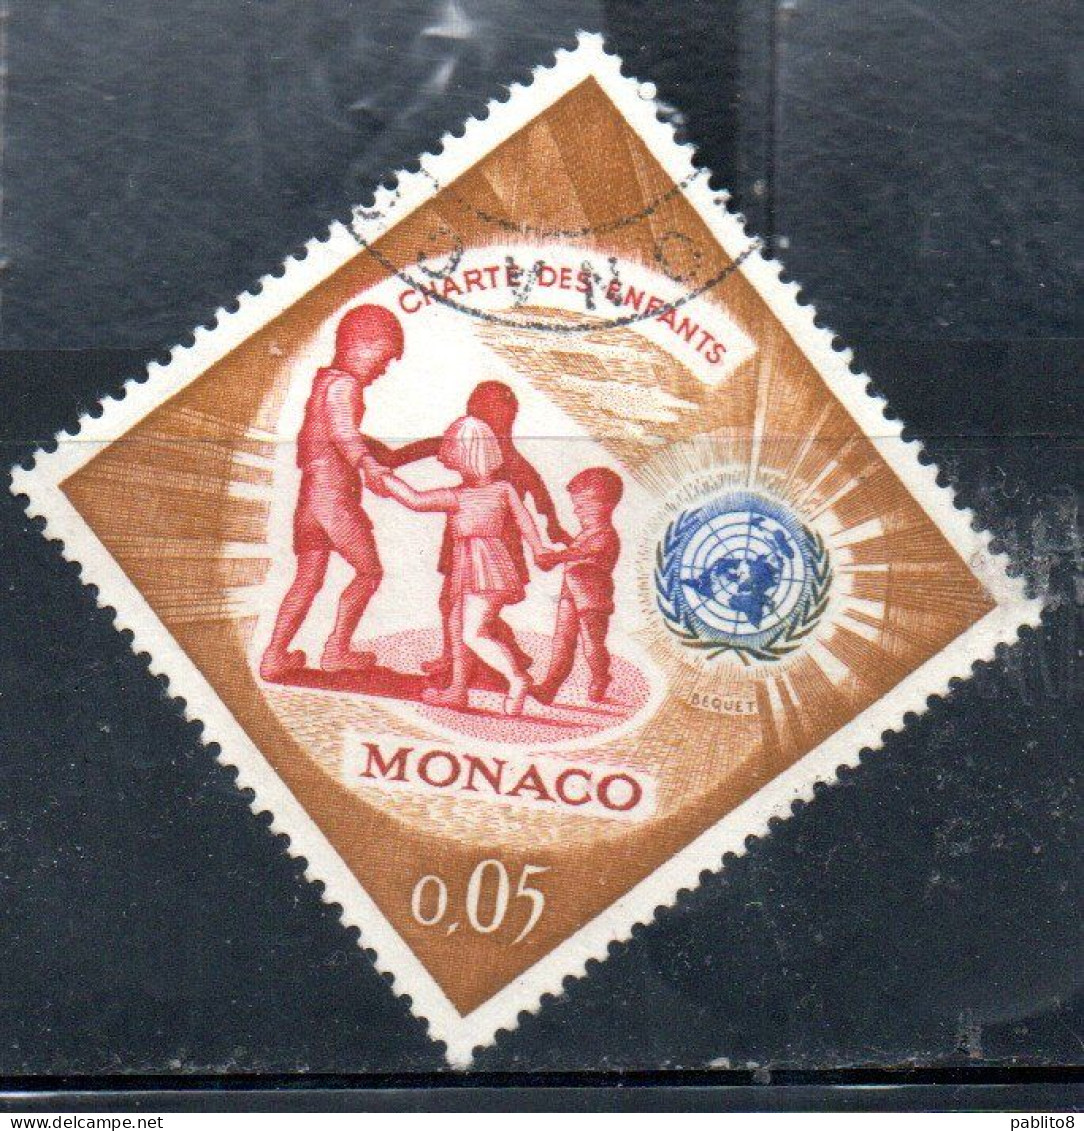 MONACO 1963 UN ONU CHILDREN' CHARTER DANCING AND UN ONU EMBLEM 5c USED USATO OBLITERE' - Usados